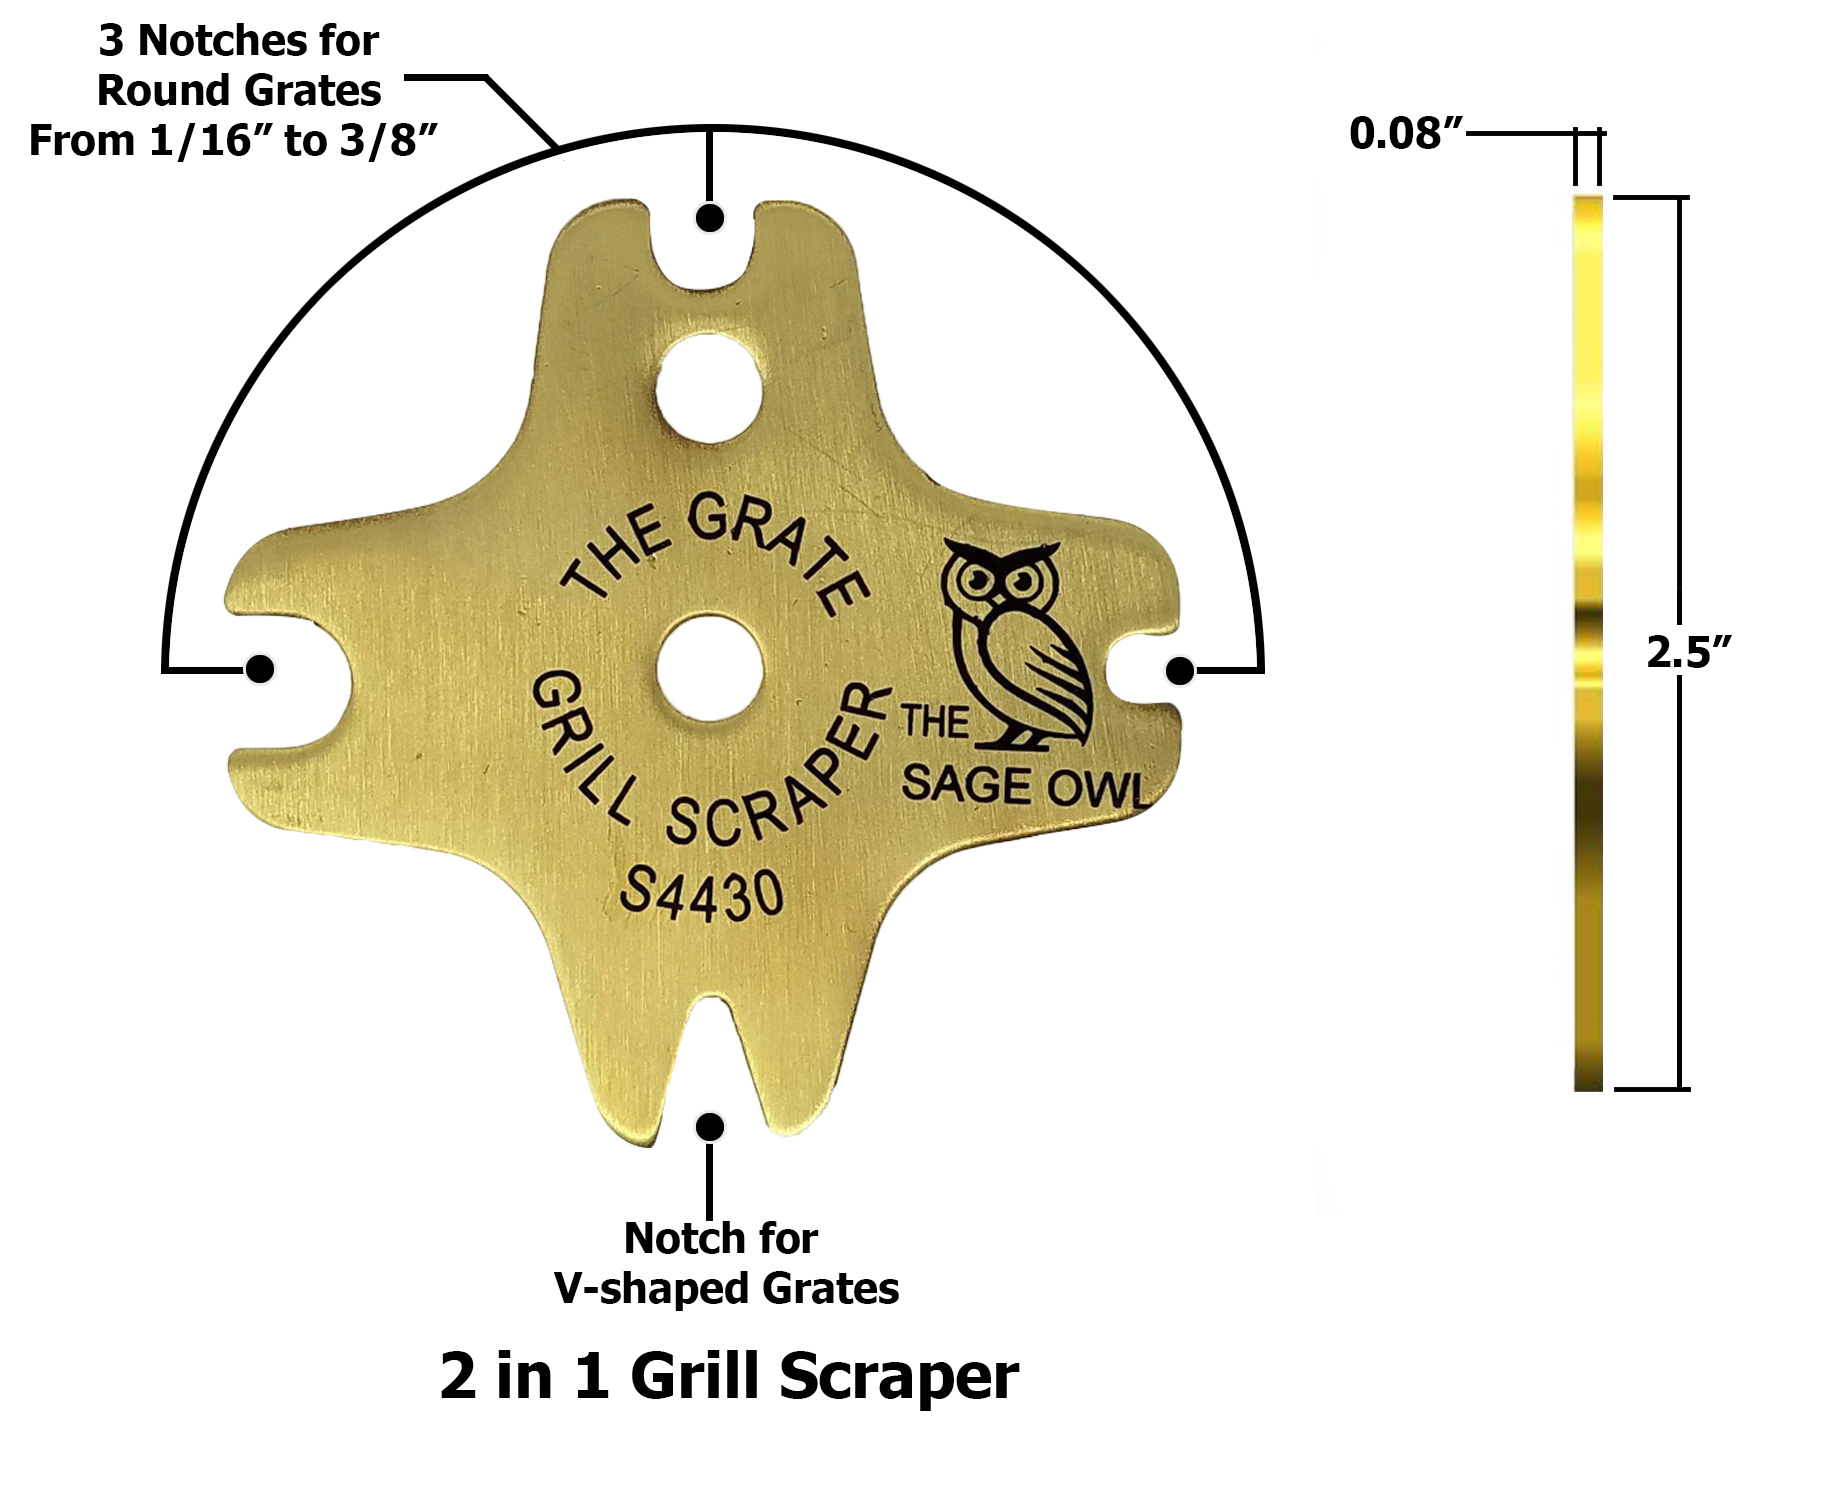 S4430 - The Grate Grill Scraper - Brass Barbque Grill Cleaner